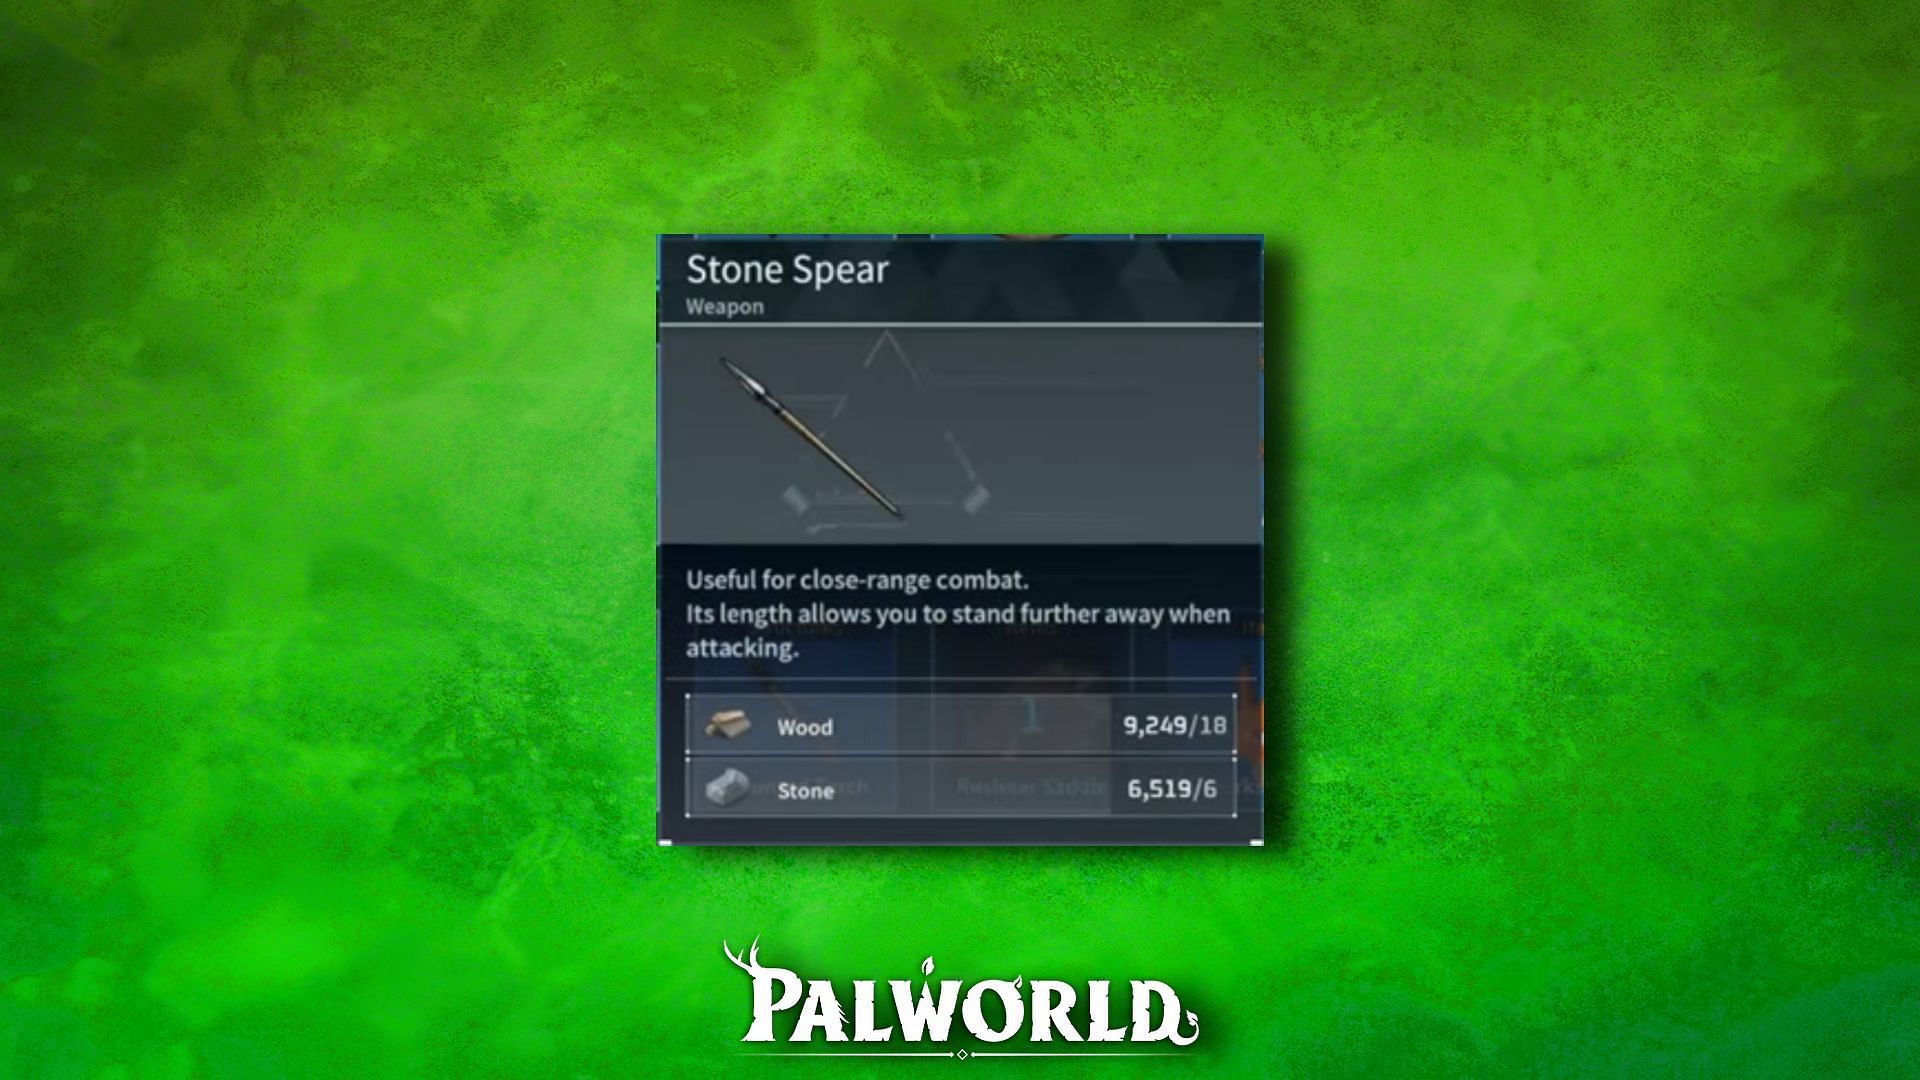 Stone Spear (Image via Pocket Pair Inc.)